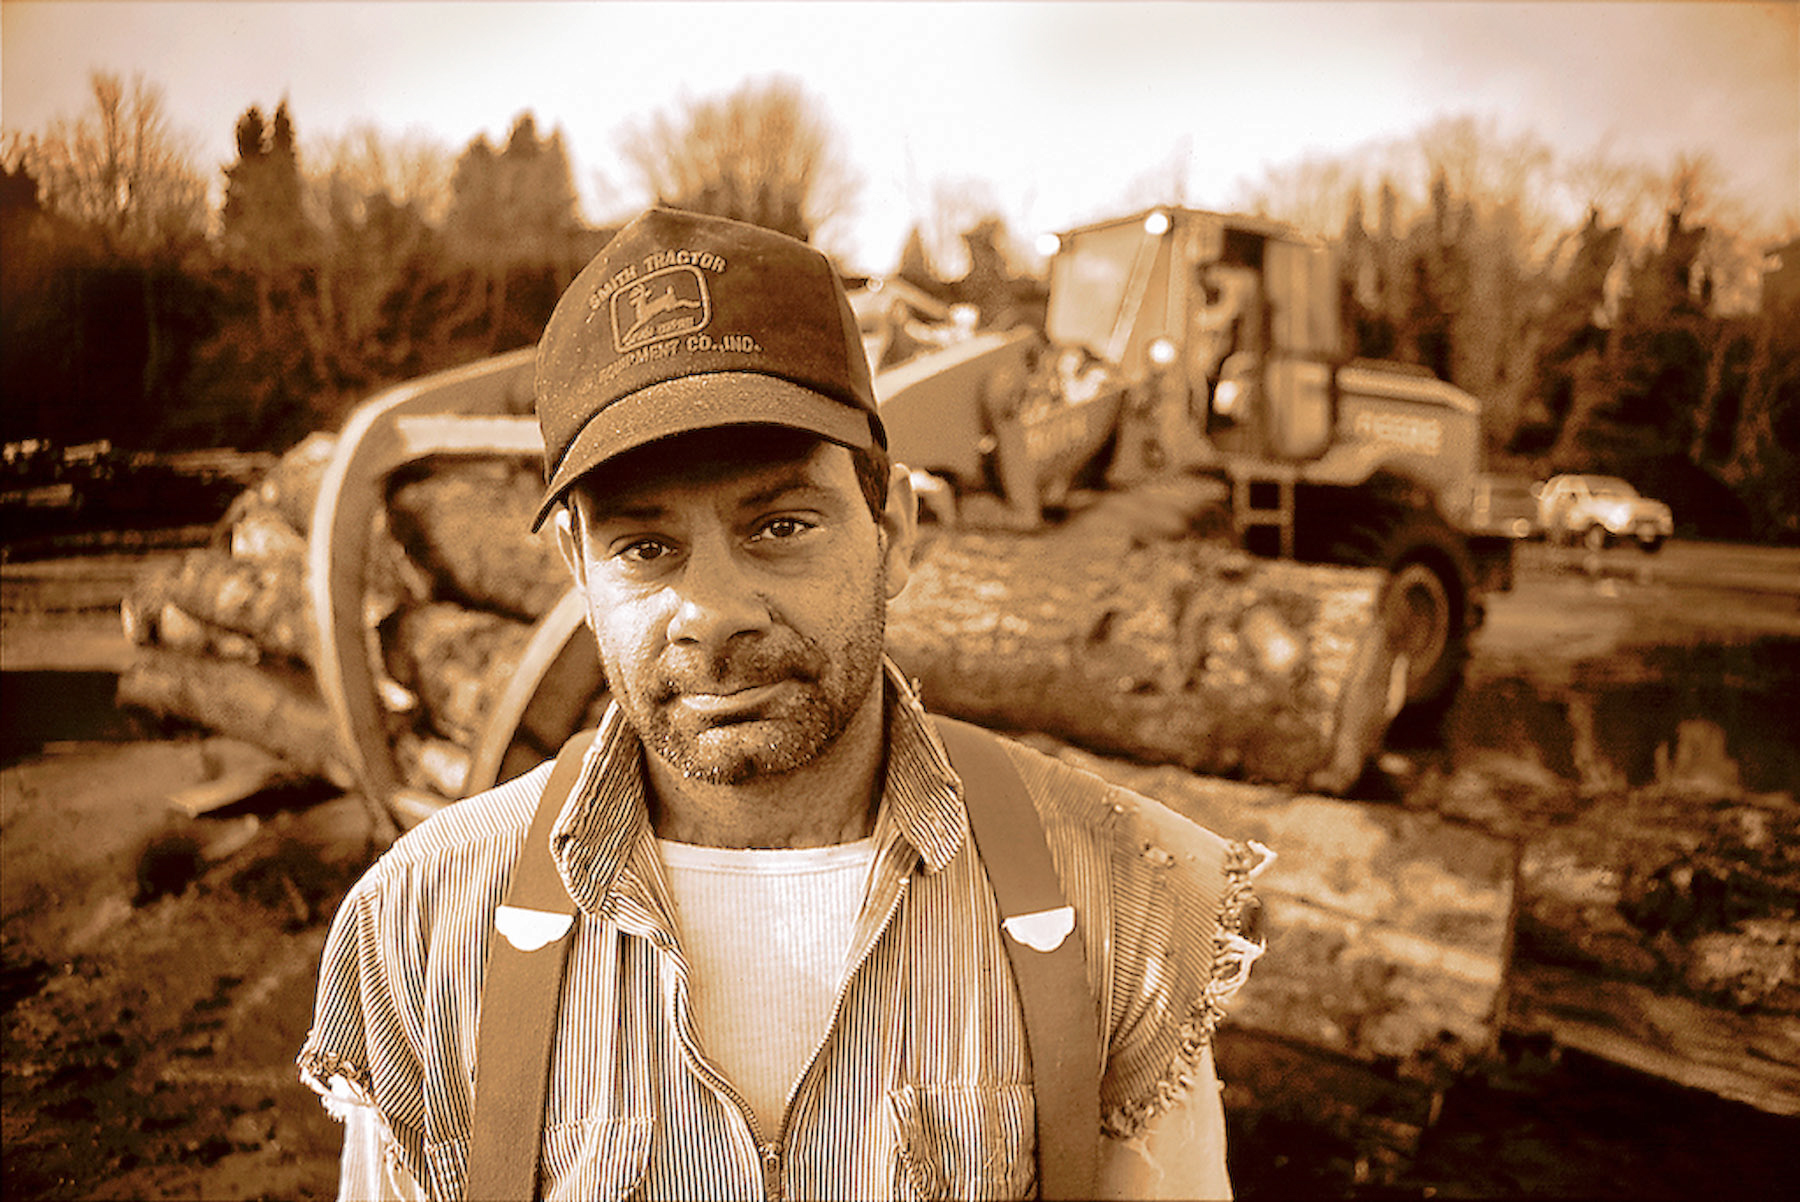 Sepia environmental portrait of a logger guy